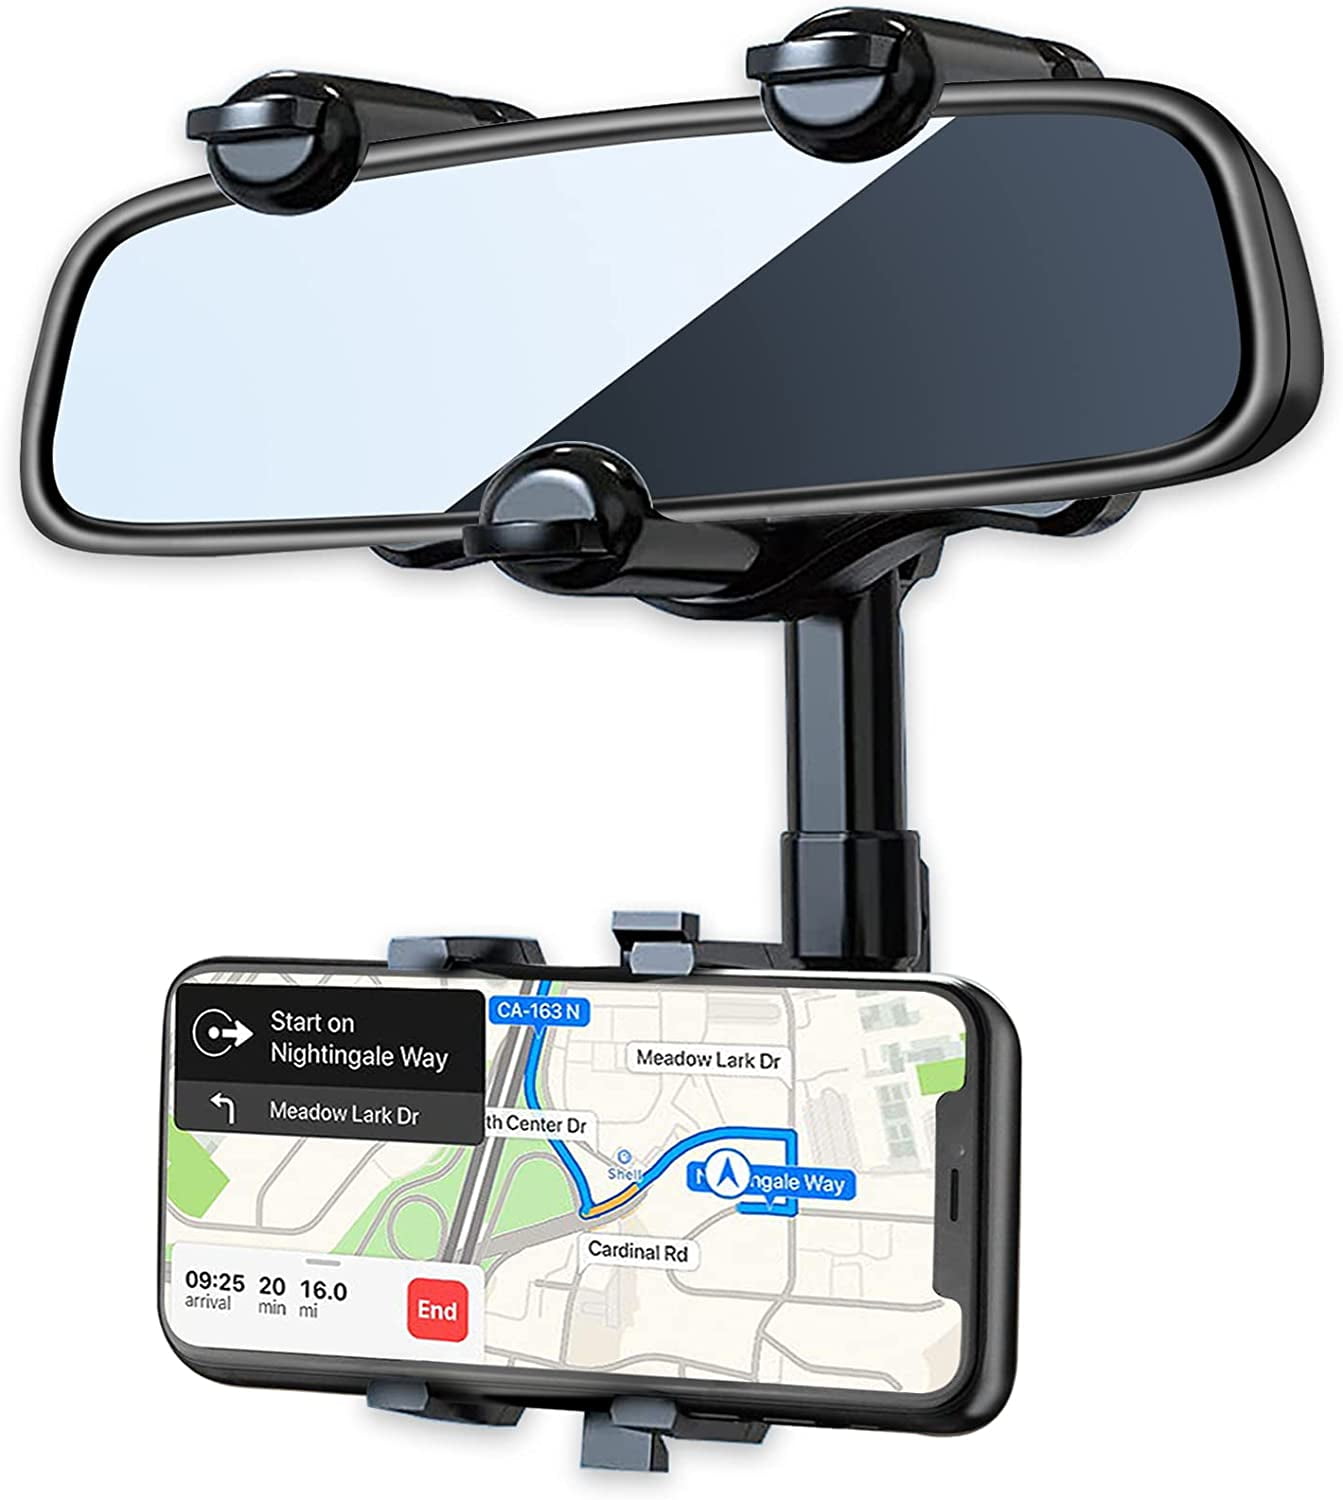 Multifunctional Mobile Phone Bracket Self Adhesive Dashboard Mount Car  Phone DIY